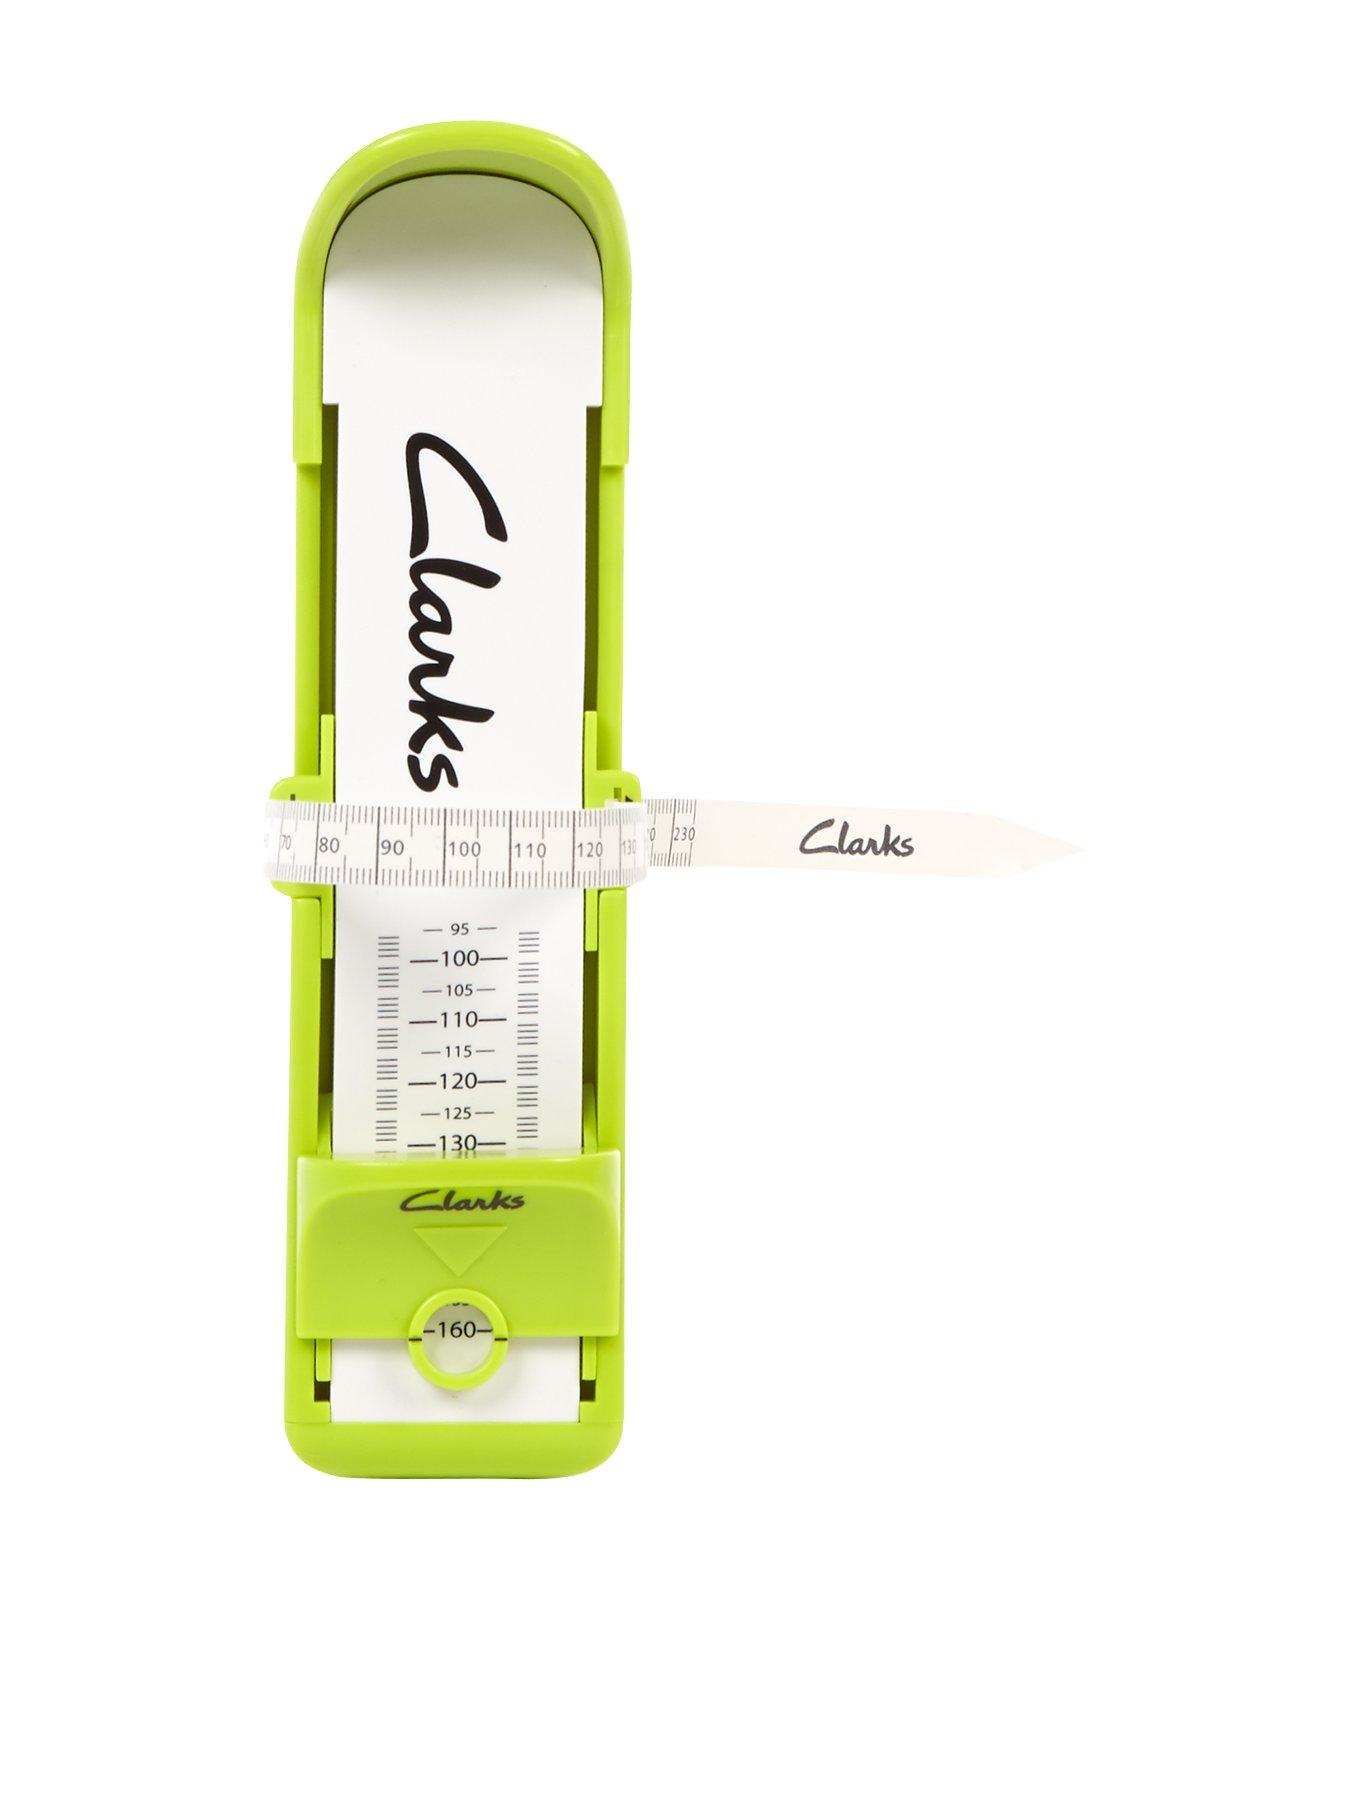 clarks measure tool